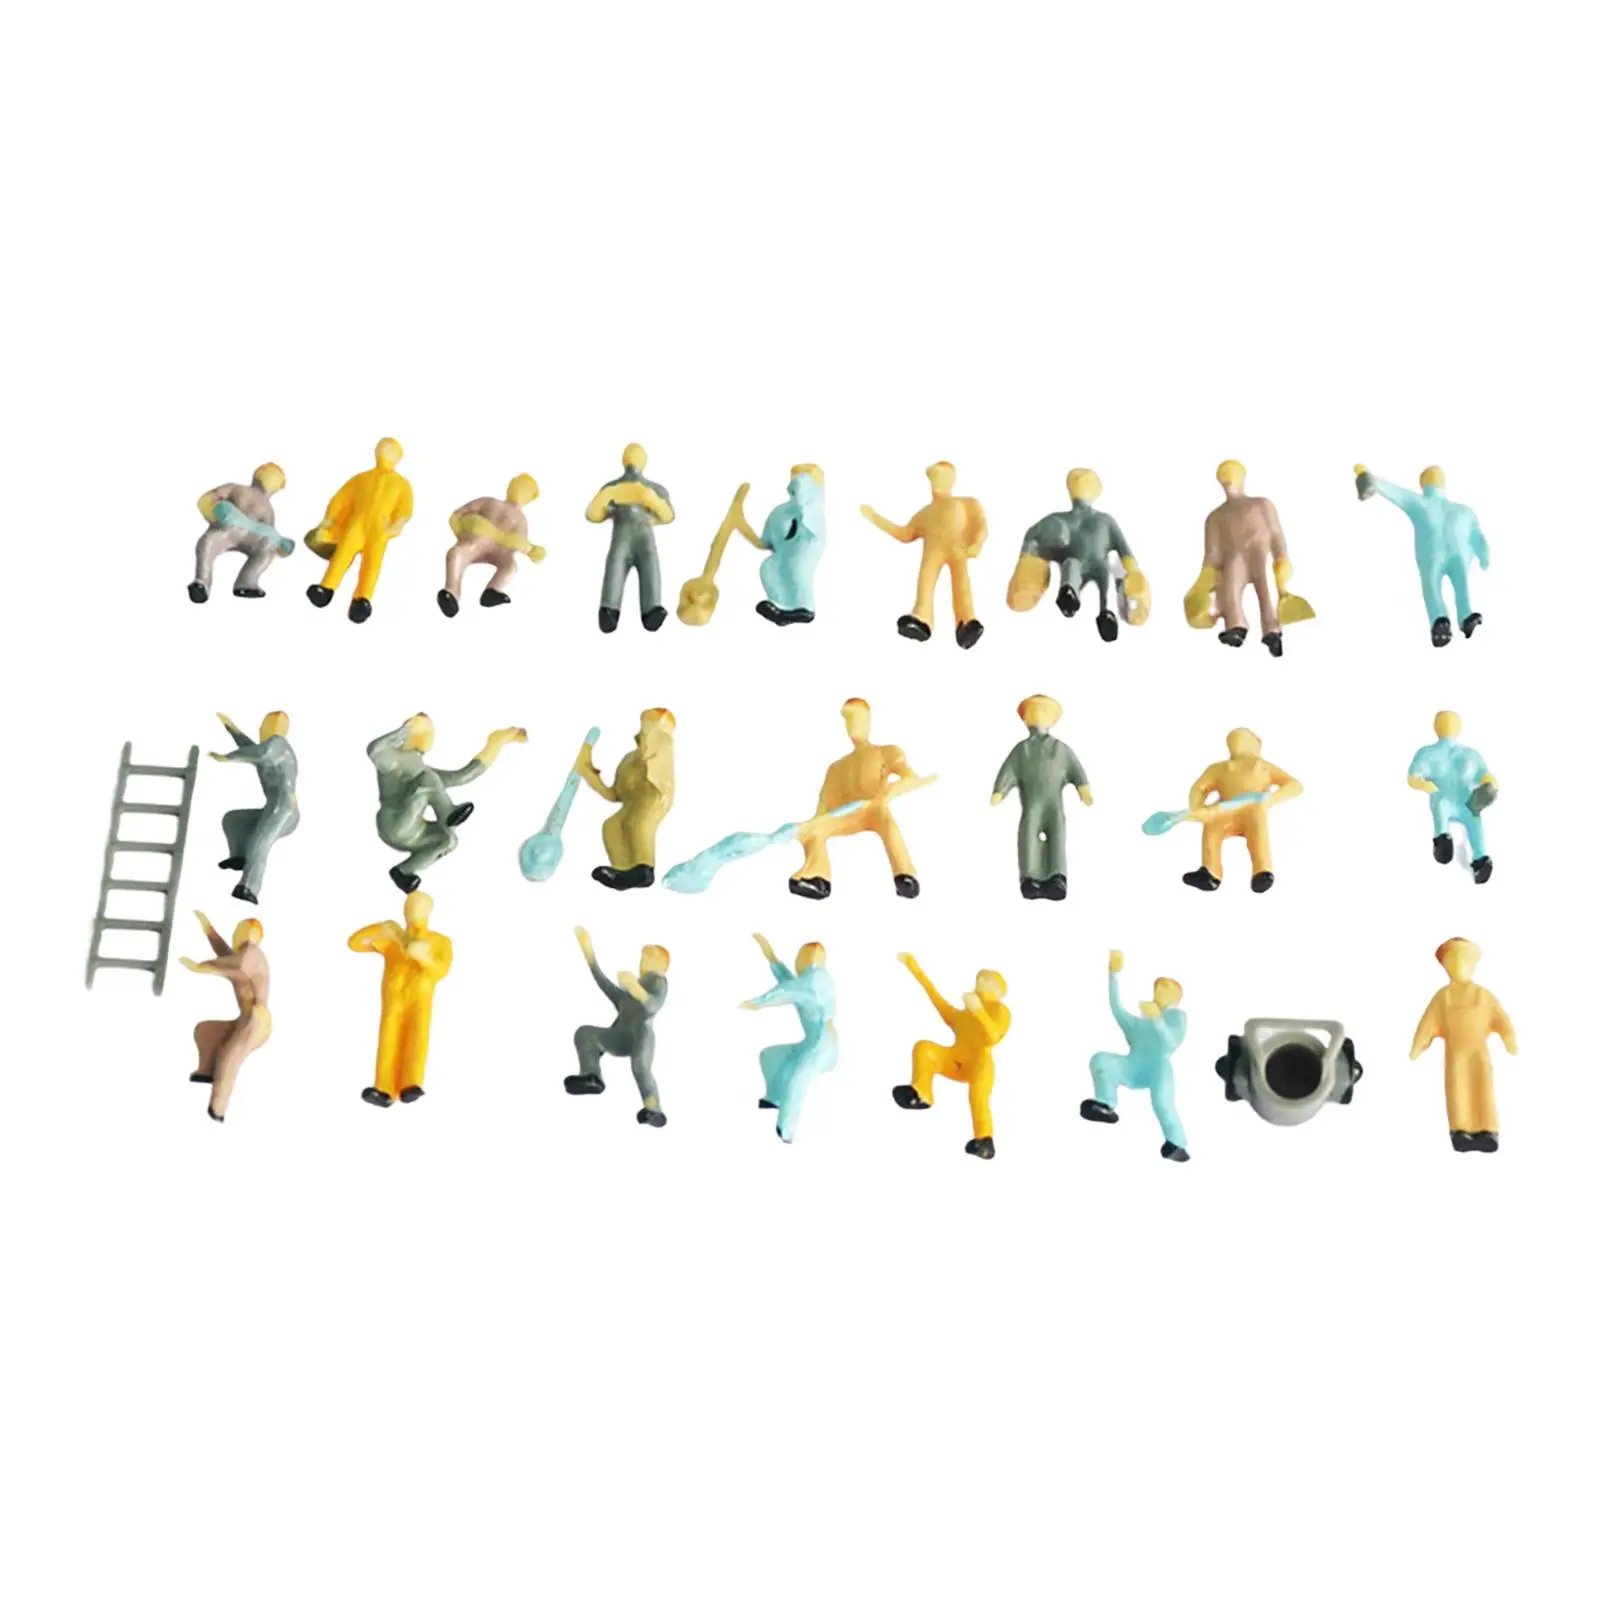 25Pcs 1/87 Miniature Model Railroad Worker Figures Movie Props Desktop Ornament Miniature Hand Painted Figurines DIY Projects